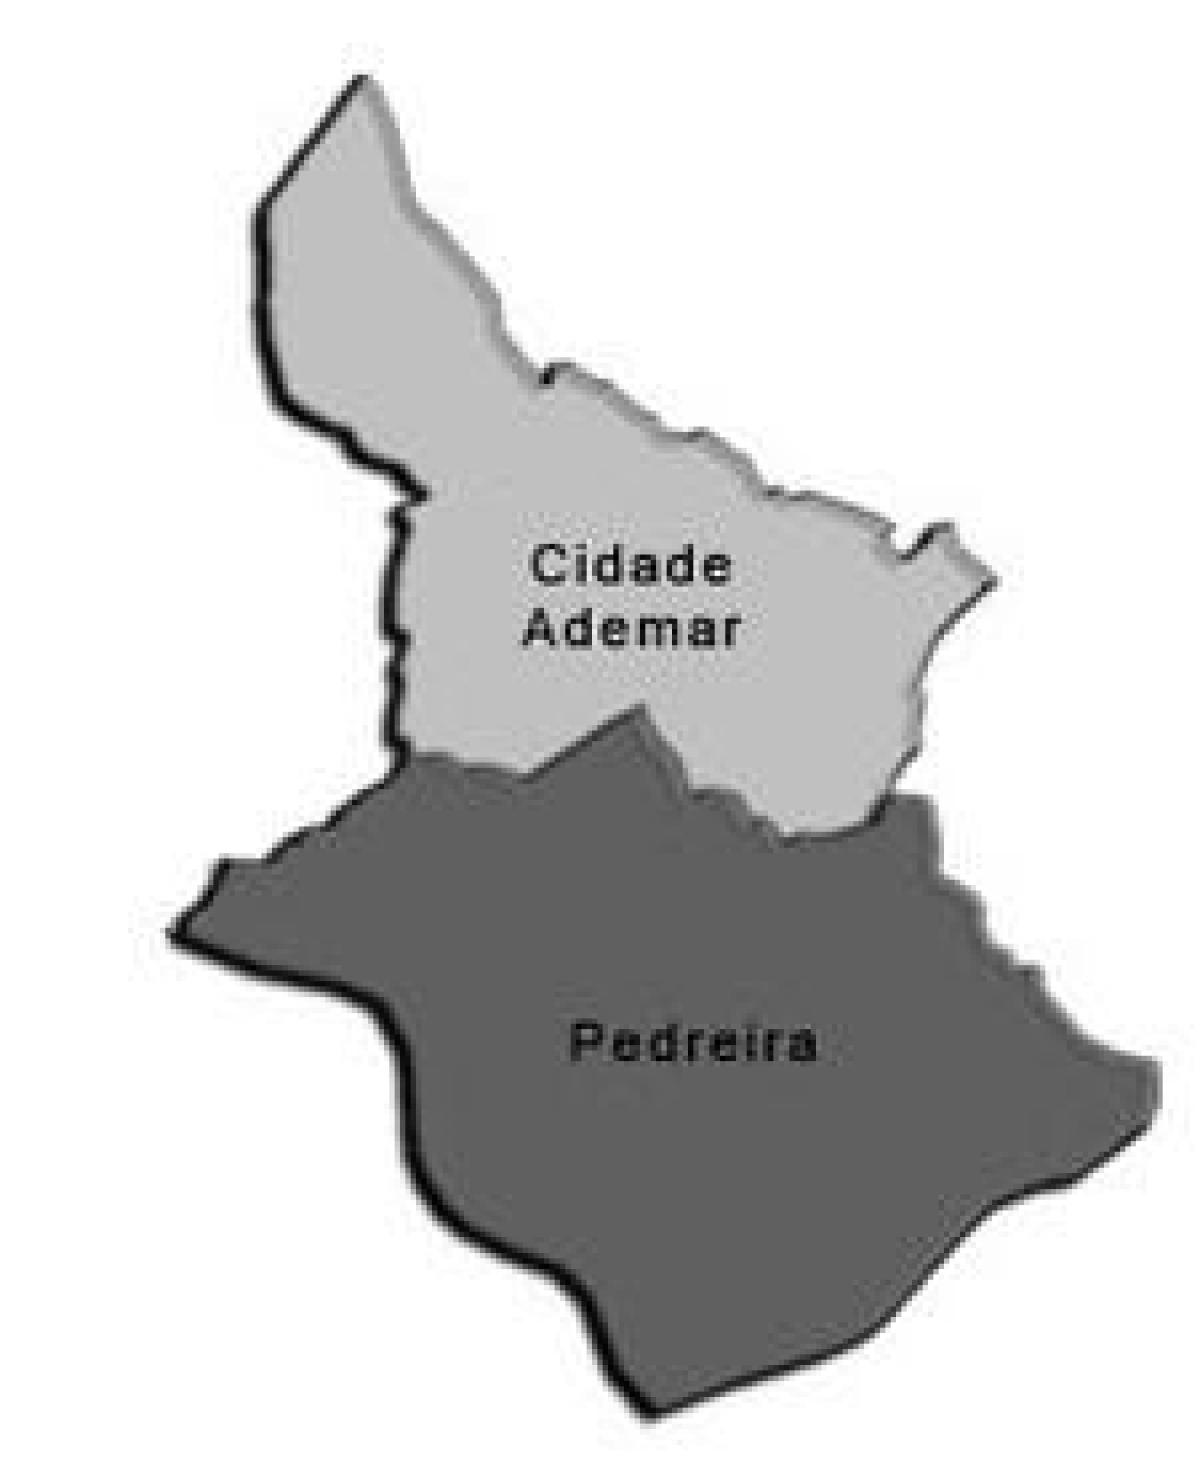 Зураг Cidade Ademar дэд prefecture